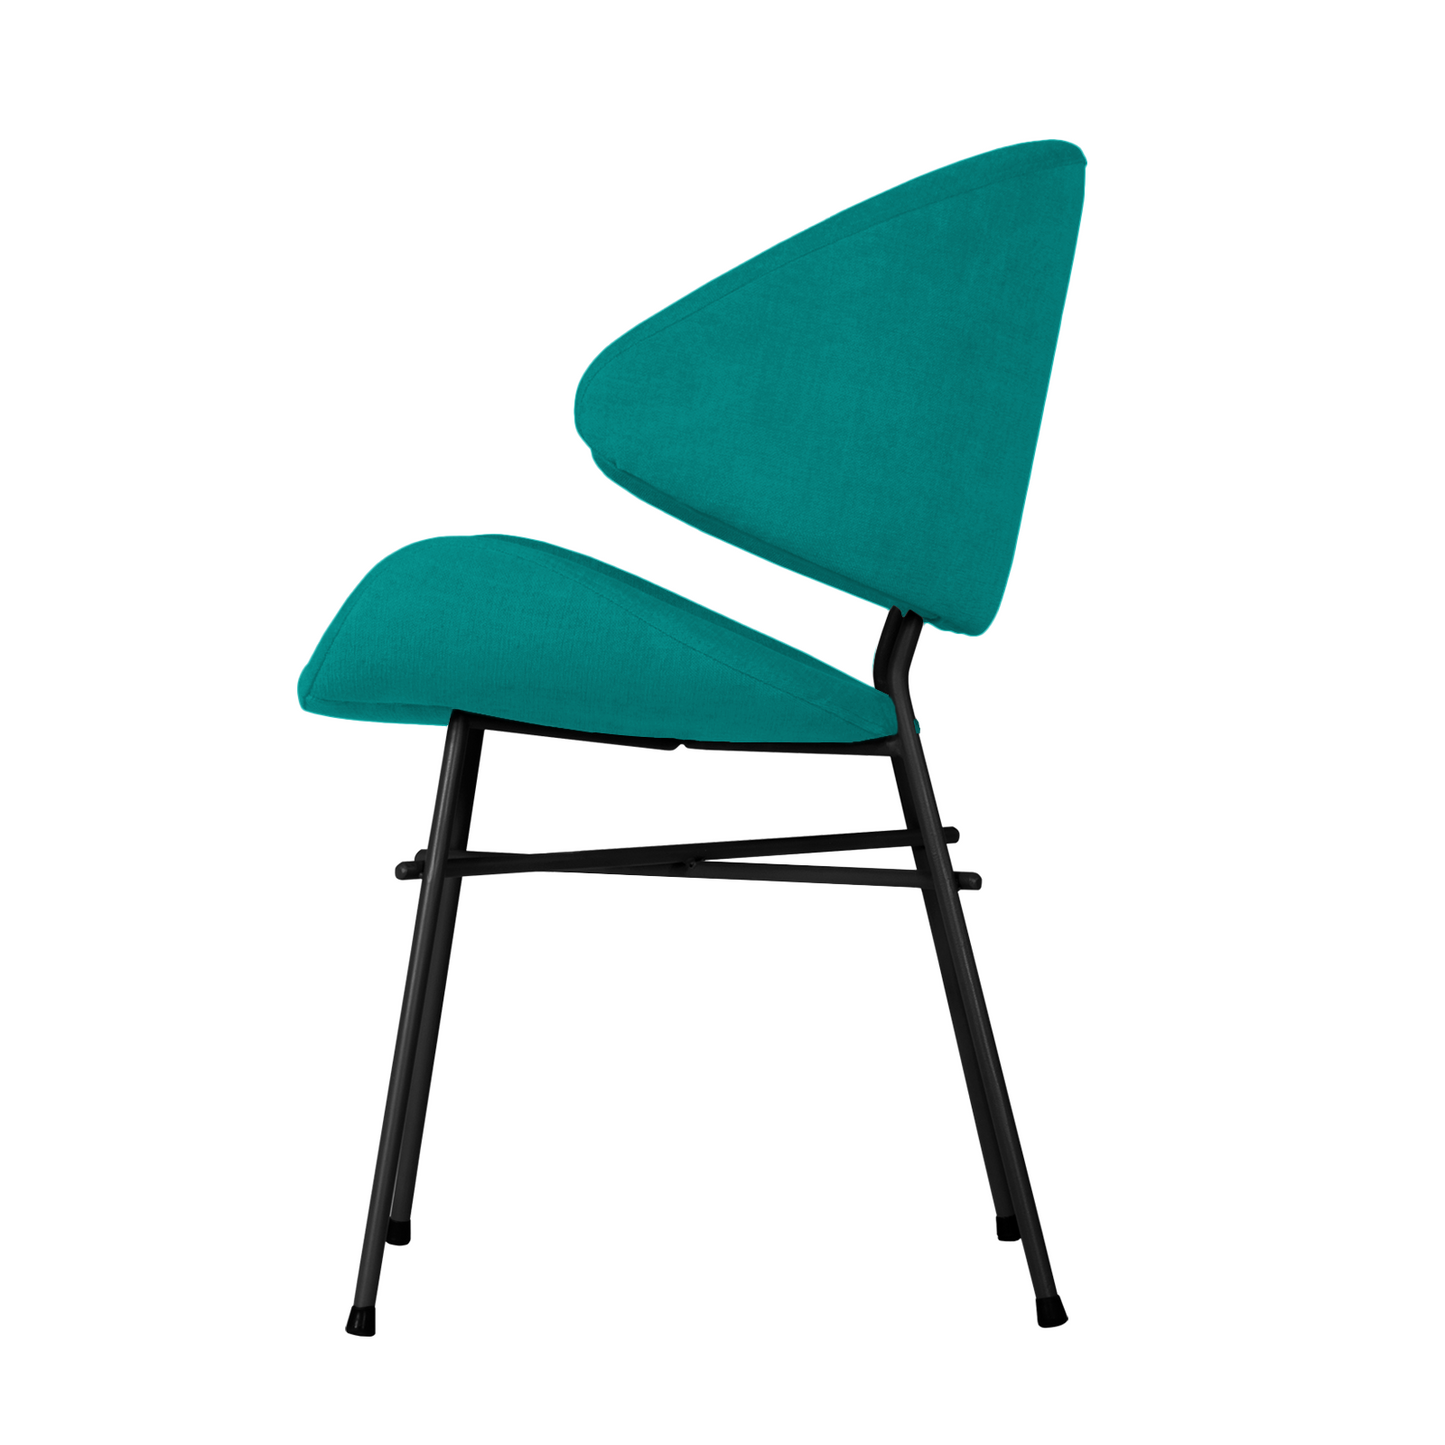 Chair Cheri Trend - Turquoise